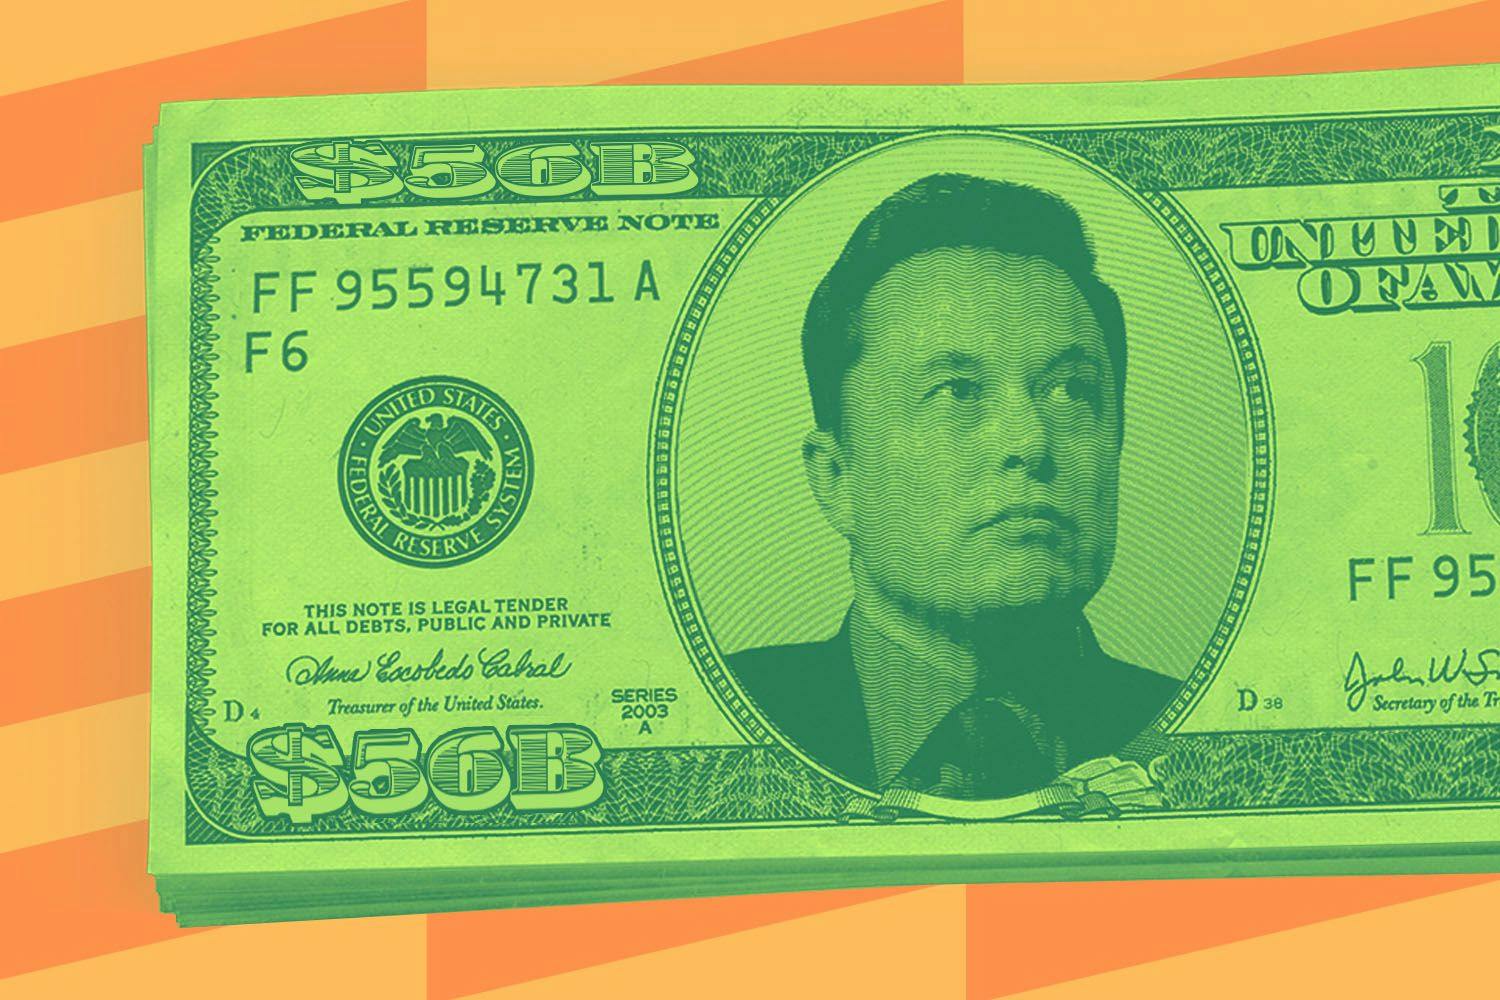 A $56 Billion dollar bill with Elon Musk's portrait on it. Illustration.